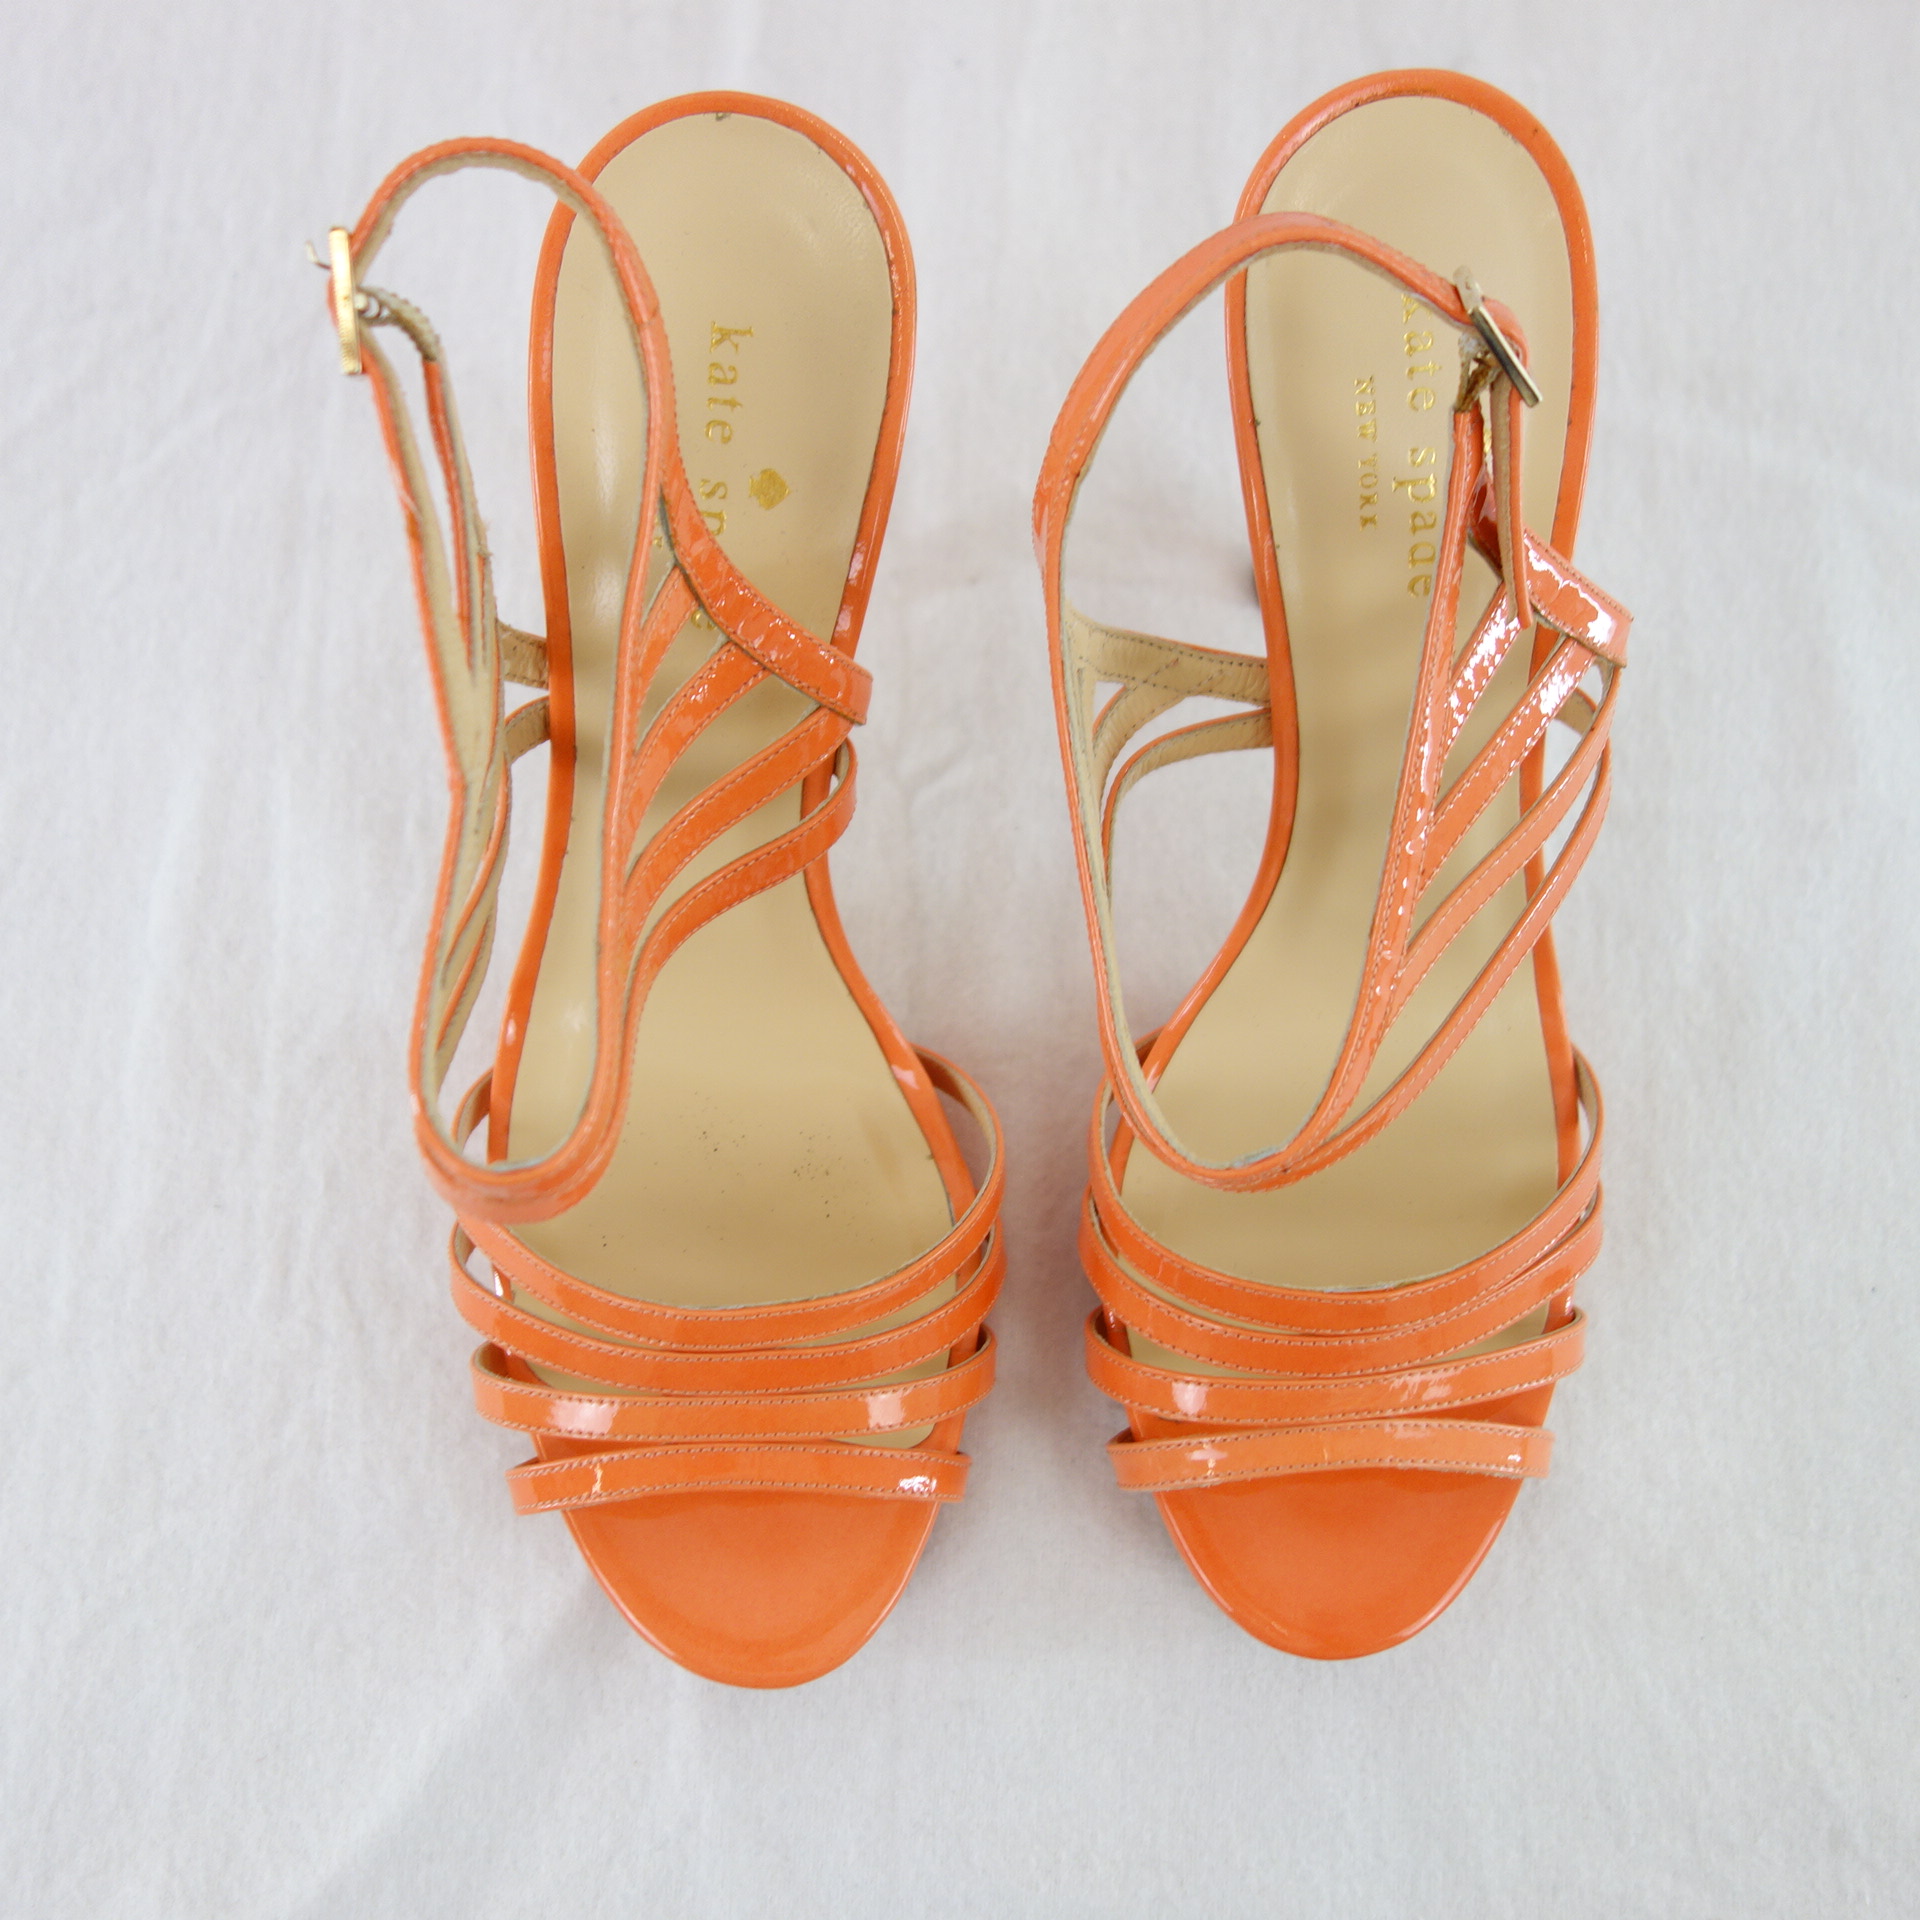 KATE SPADE New York Damen Schuhe Sandaletten Stiletto Pumps Lackleder Leder Orange 